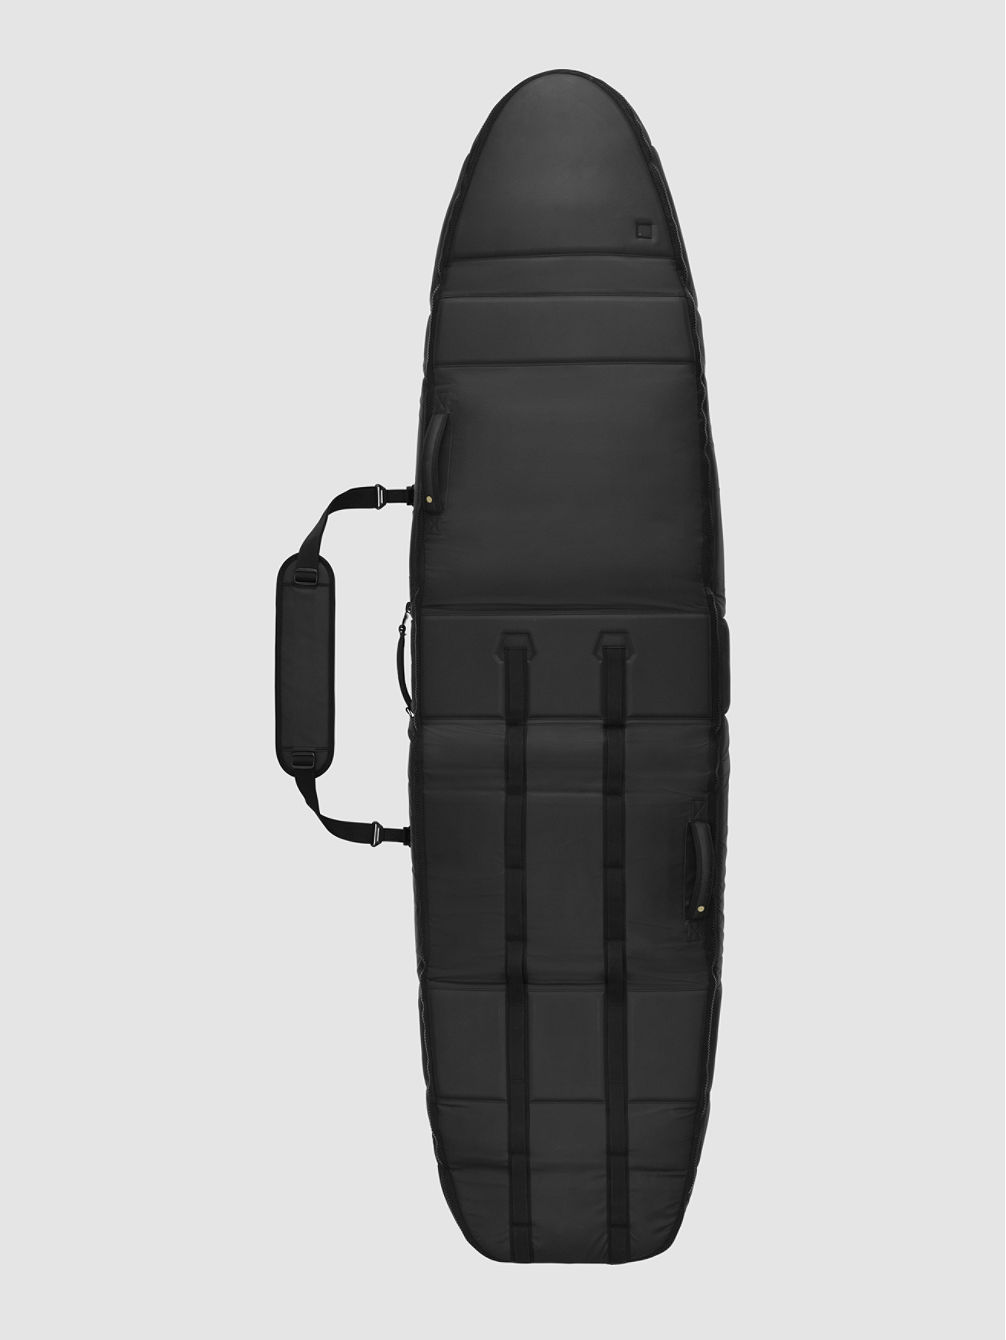 3-4 Stab Ltd Surfboard Bag